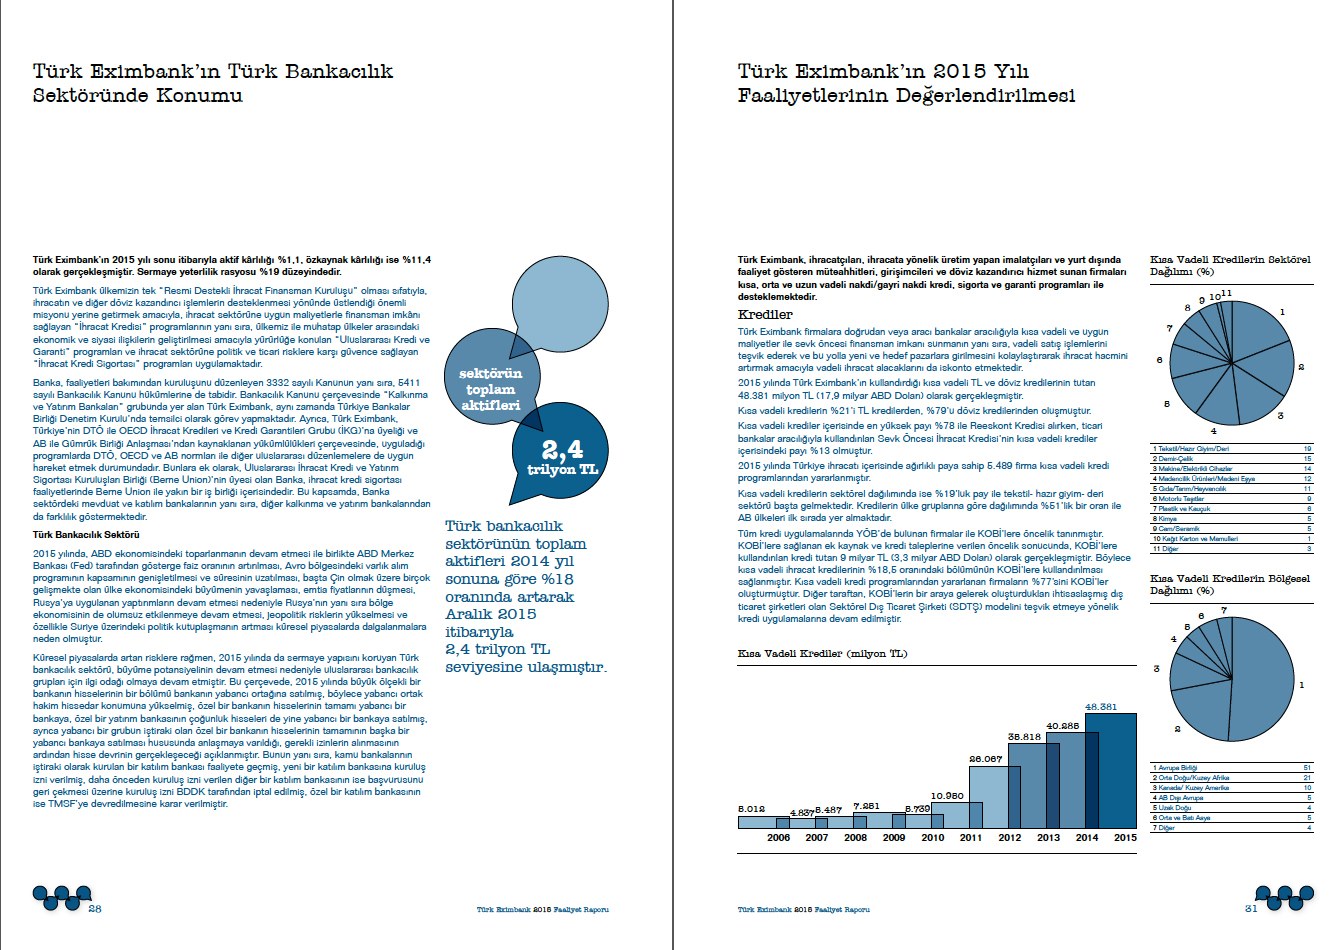 TÜRK EXİMBANK / 2015 Faaliyet Raporu / 2015 Annual Report